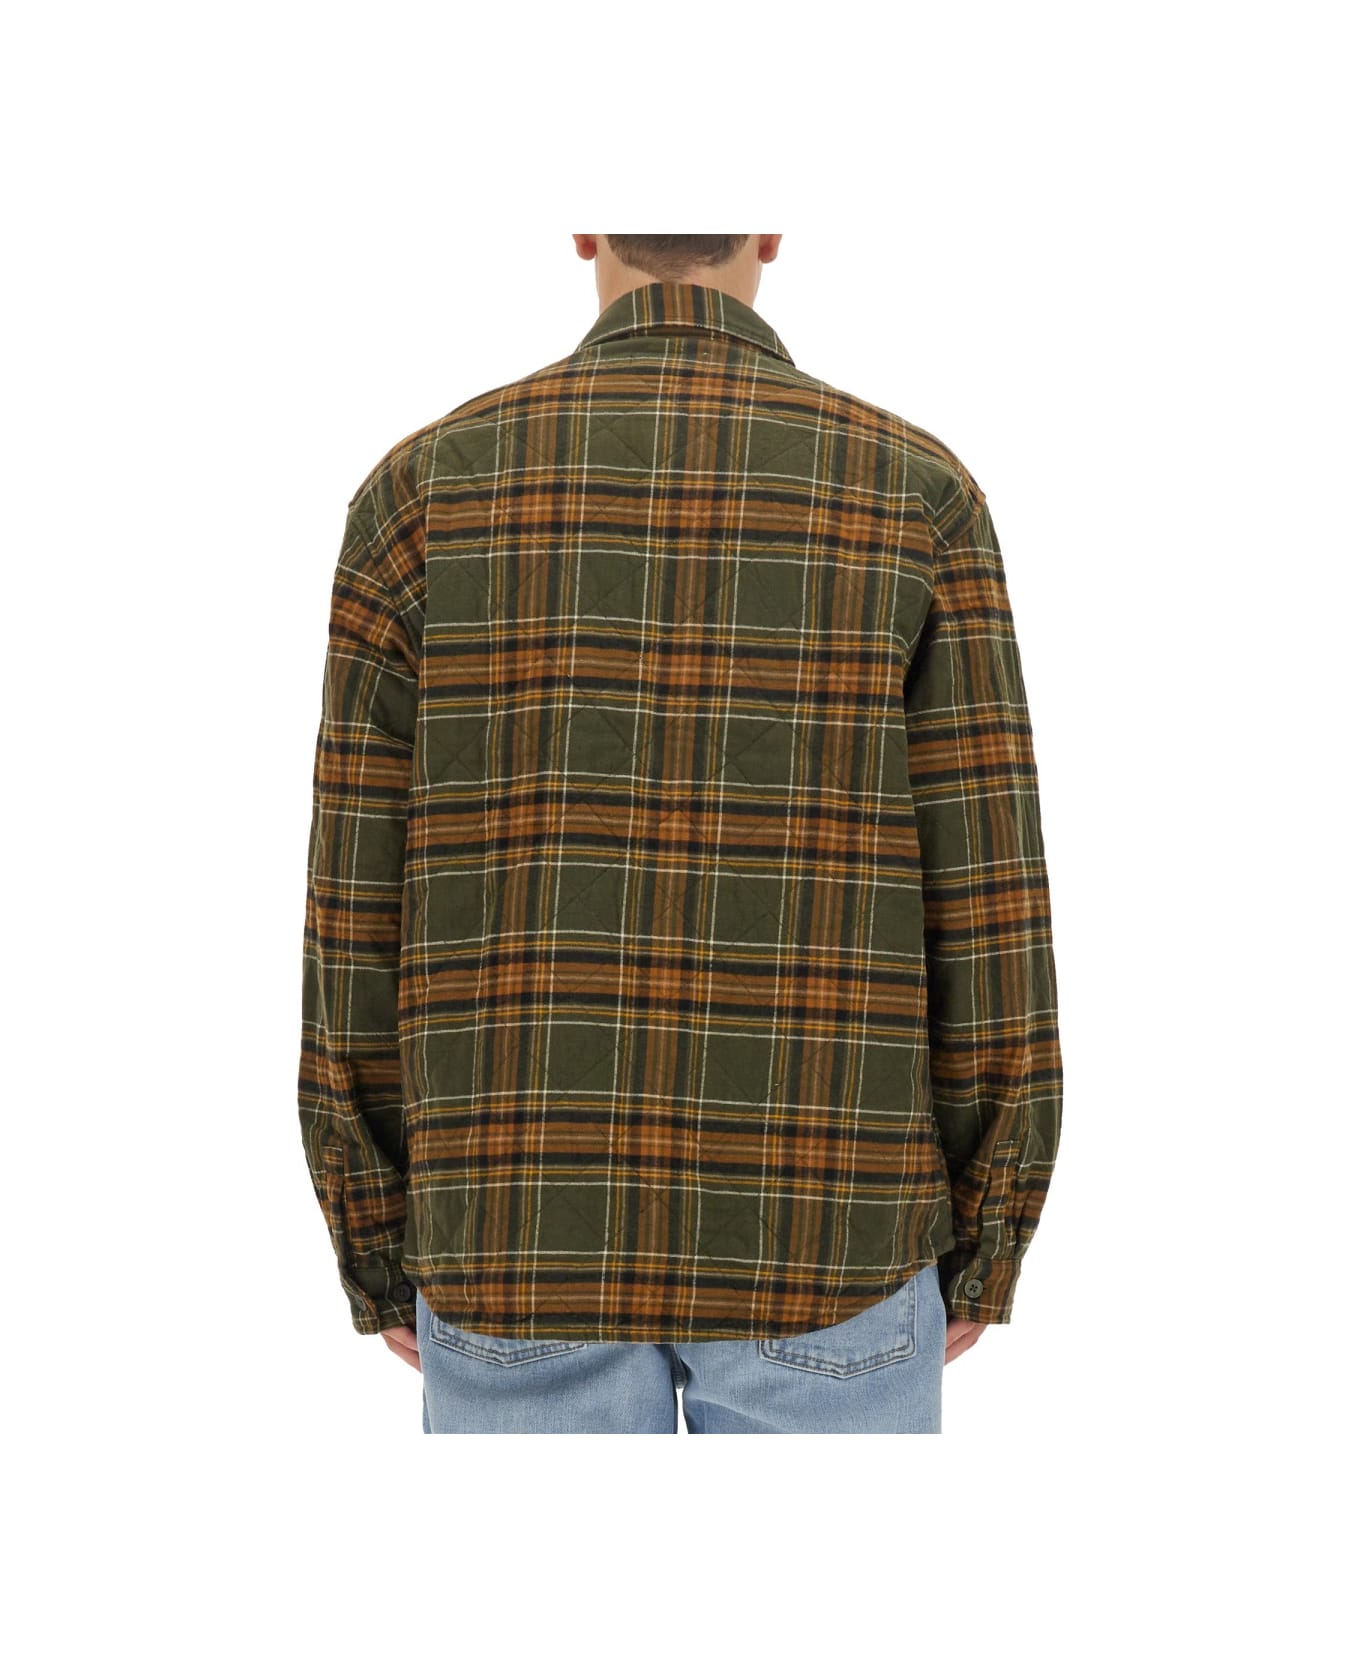 Carhartt Shirt Jacket - MULTICOLOUR